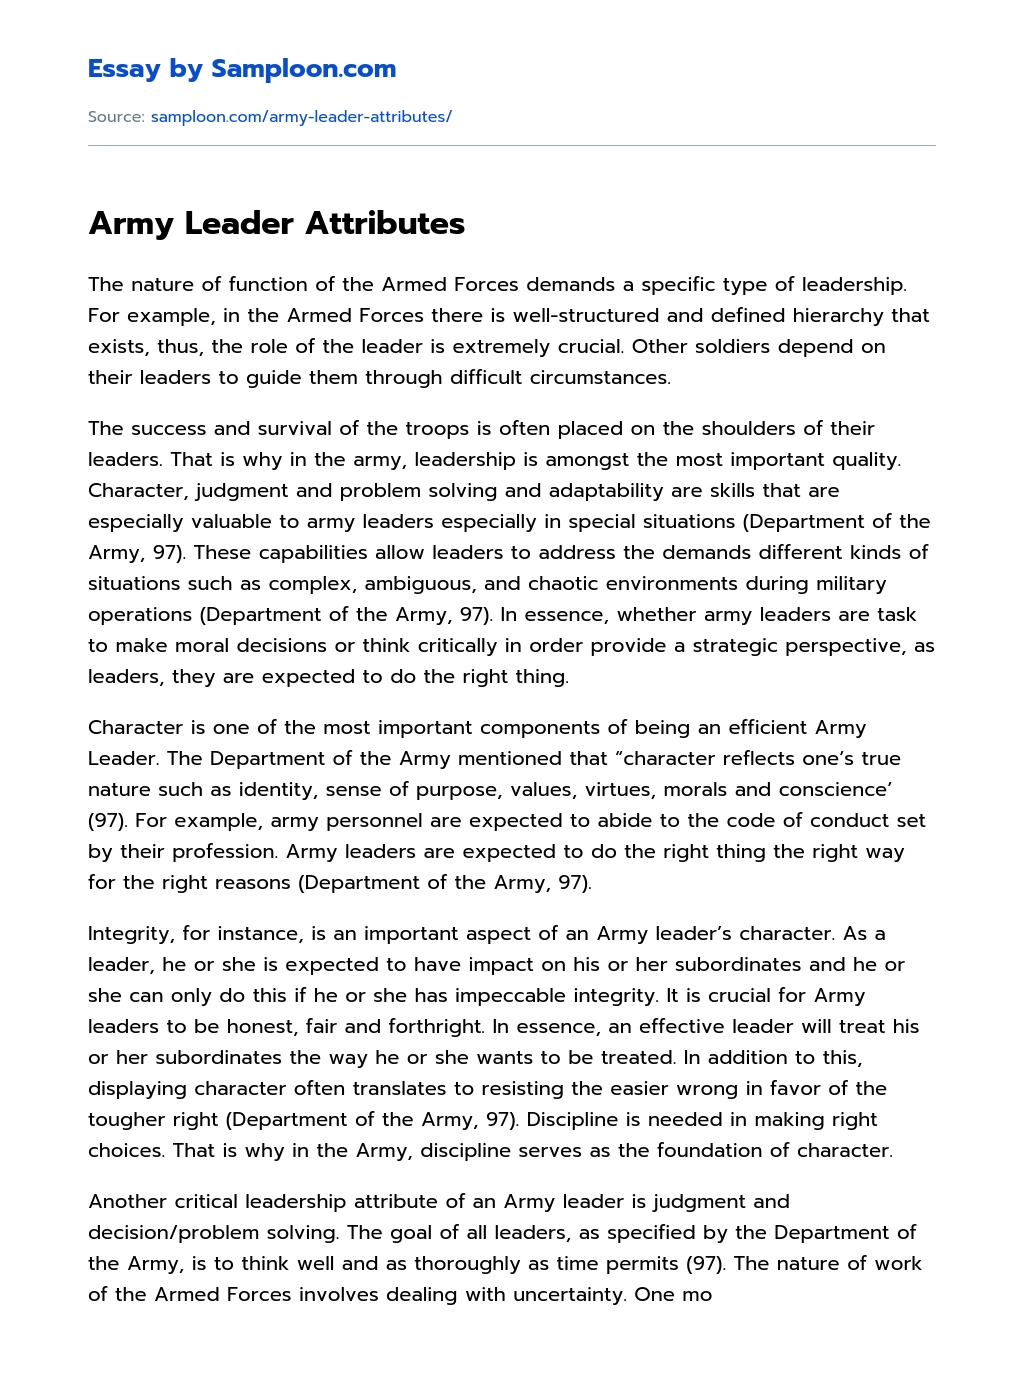 blc informative essay army values